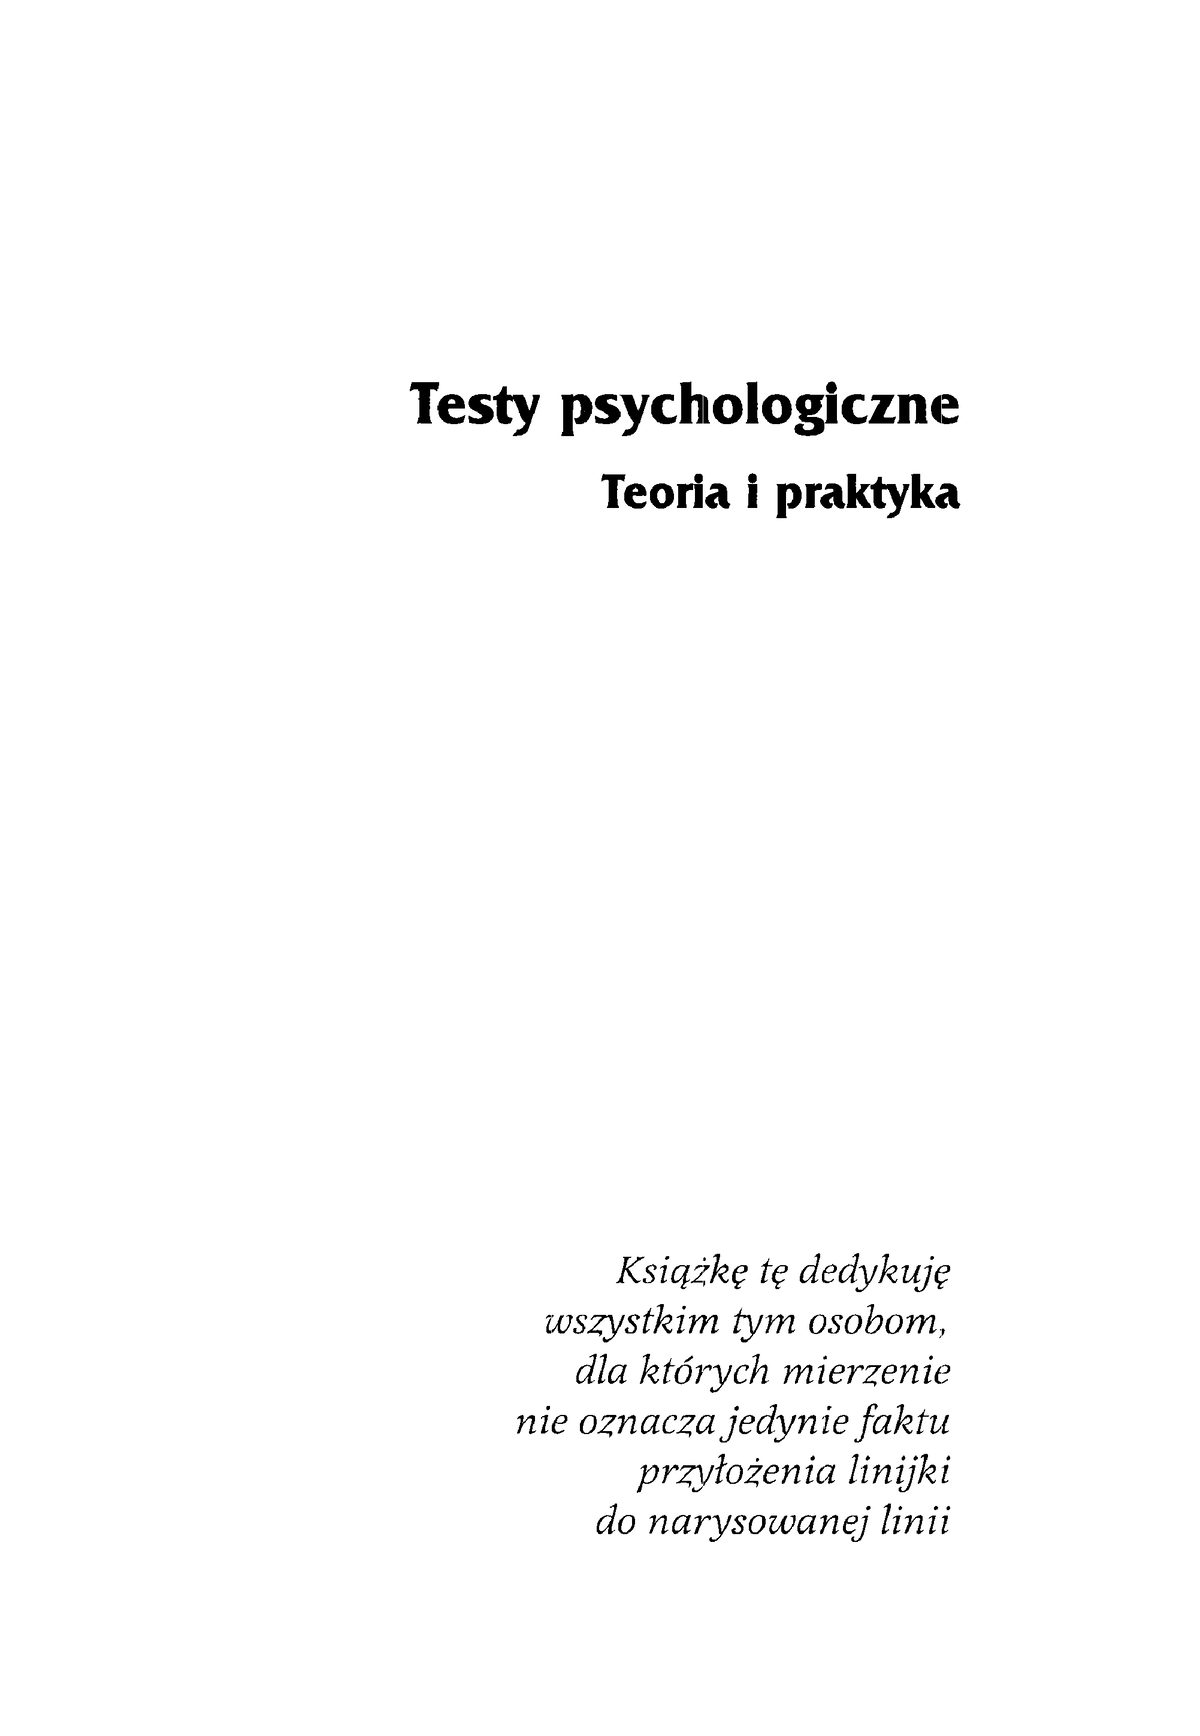 Hornowska E Testy Psychologiczne Teoria I Praktyka Testy Psychologiczne Teoria I Praktyka 7300